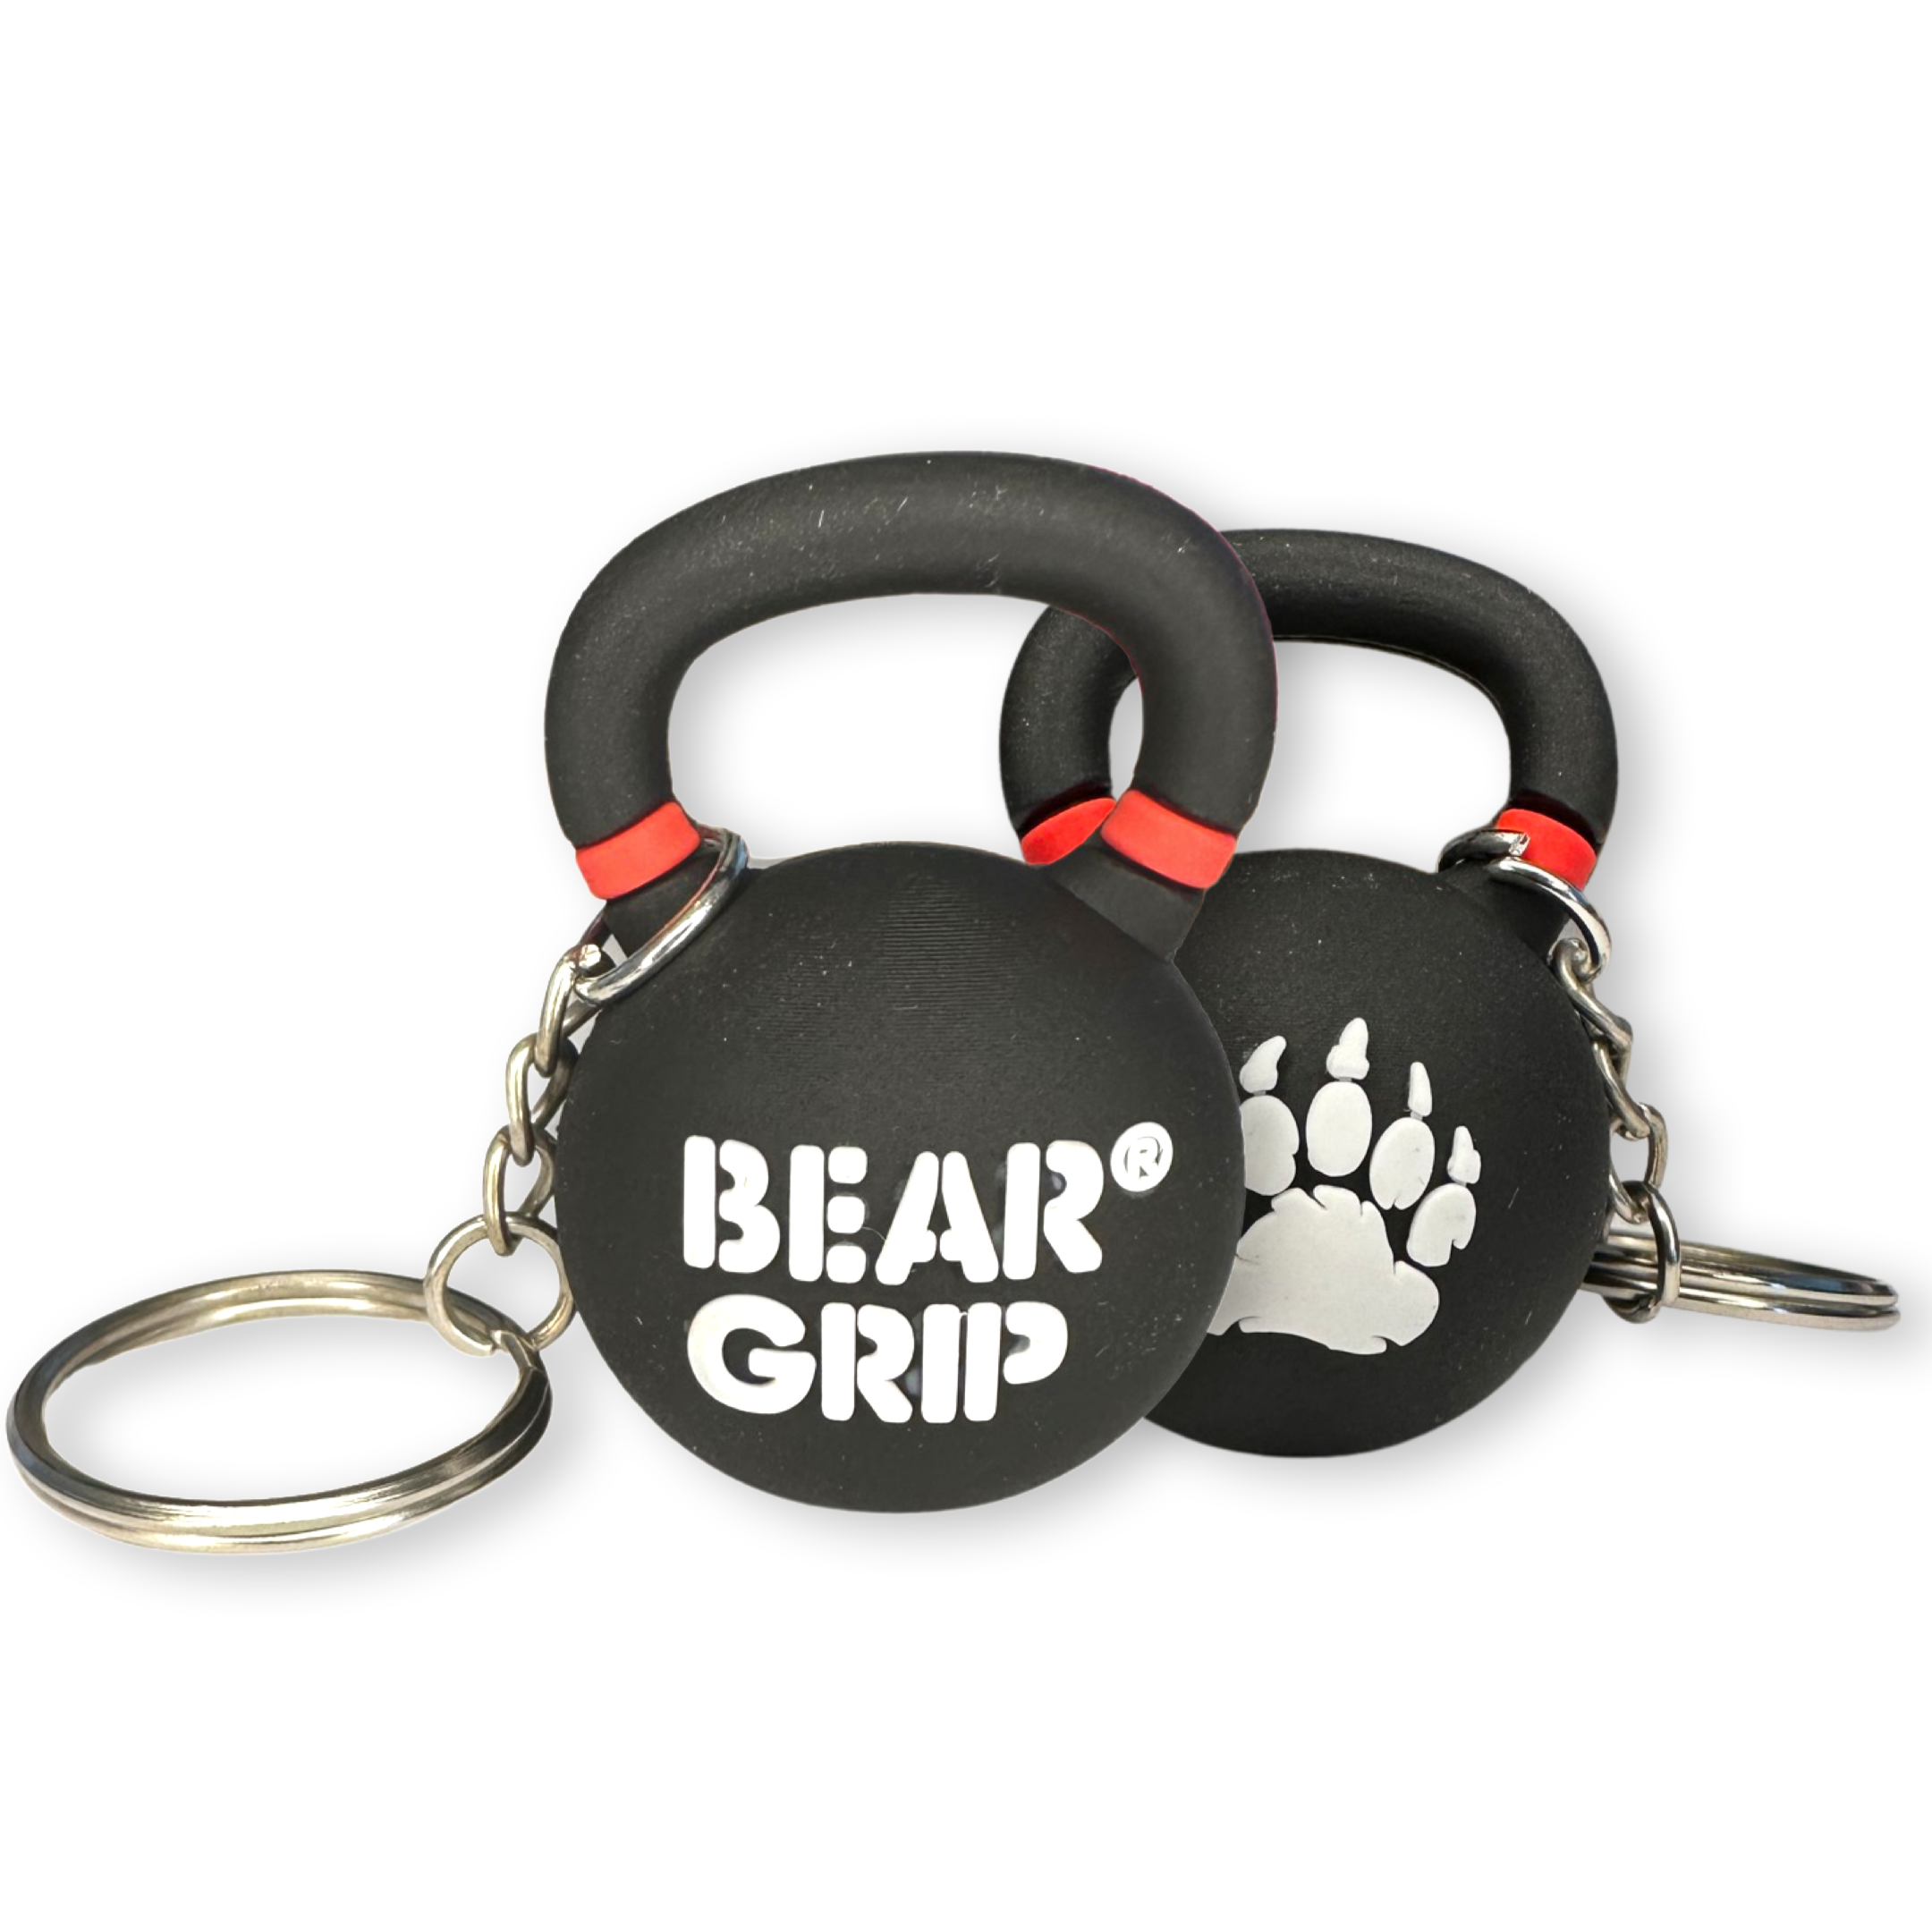 BEAR GRIP® Kettlebell Key ring